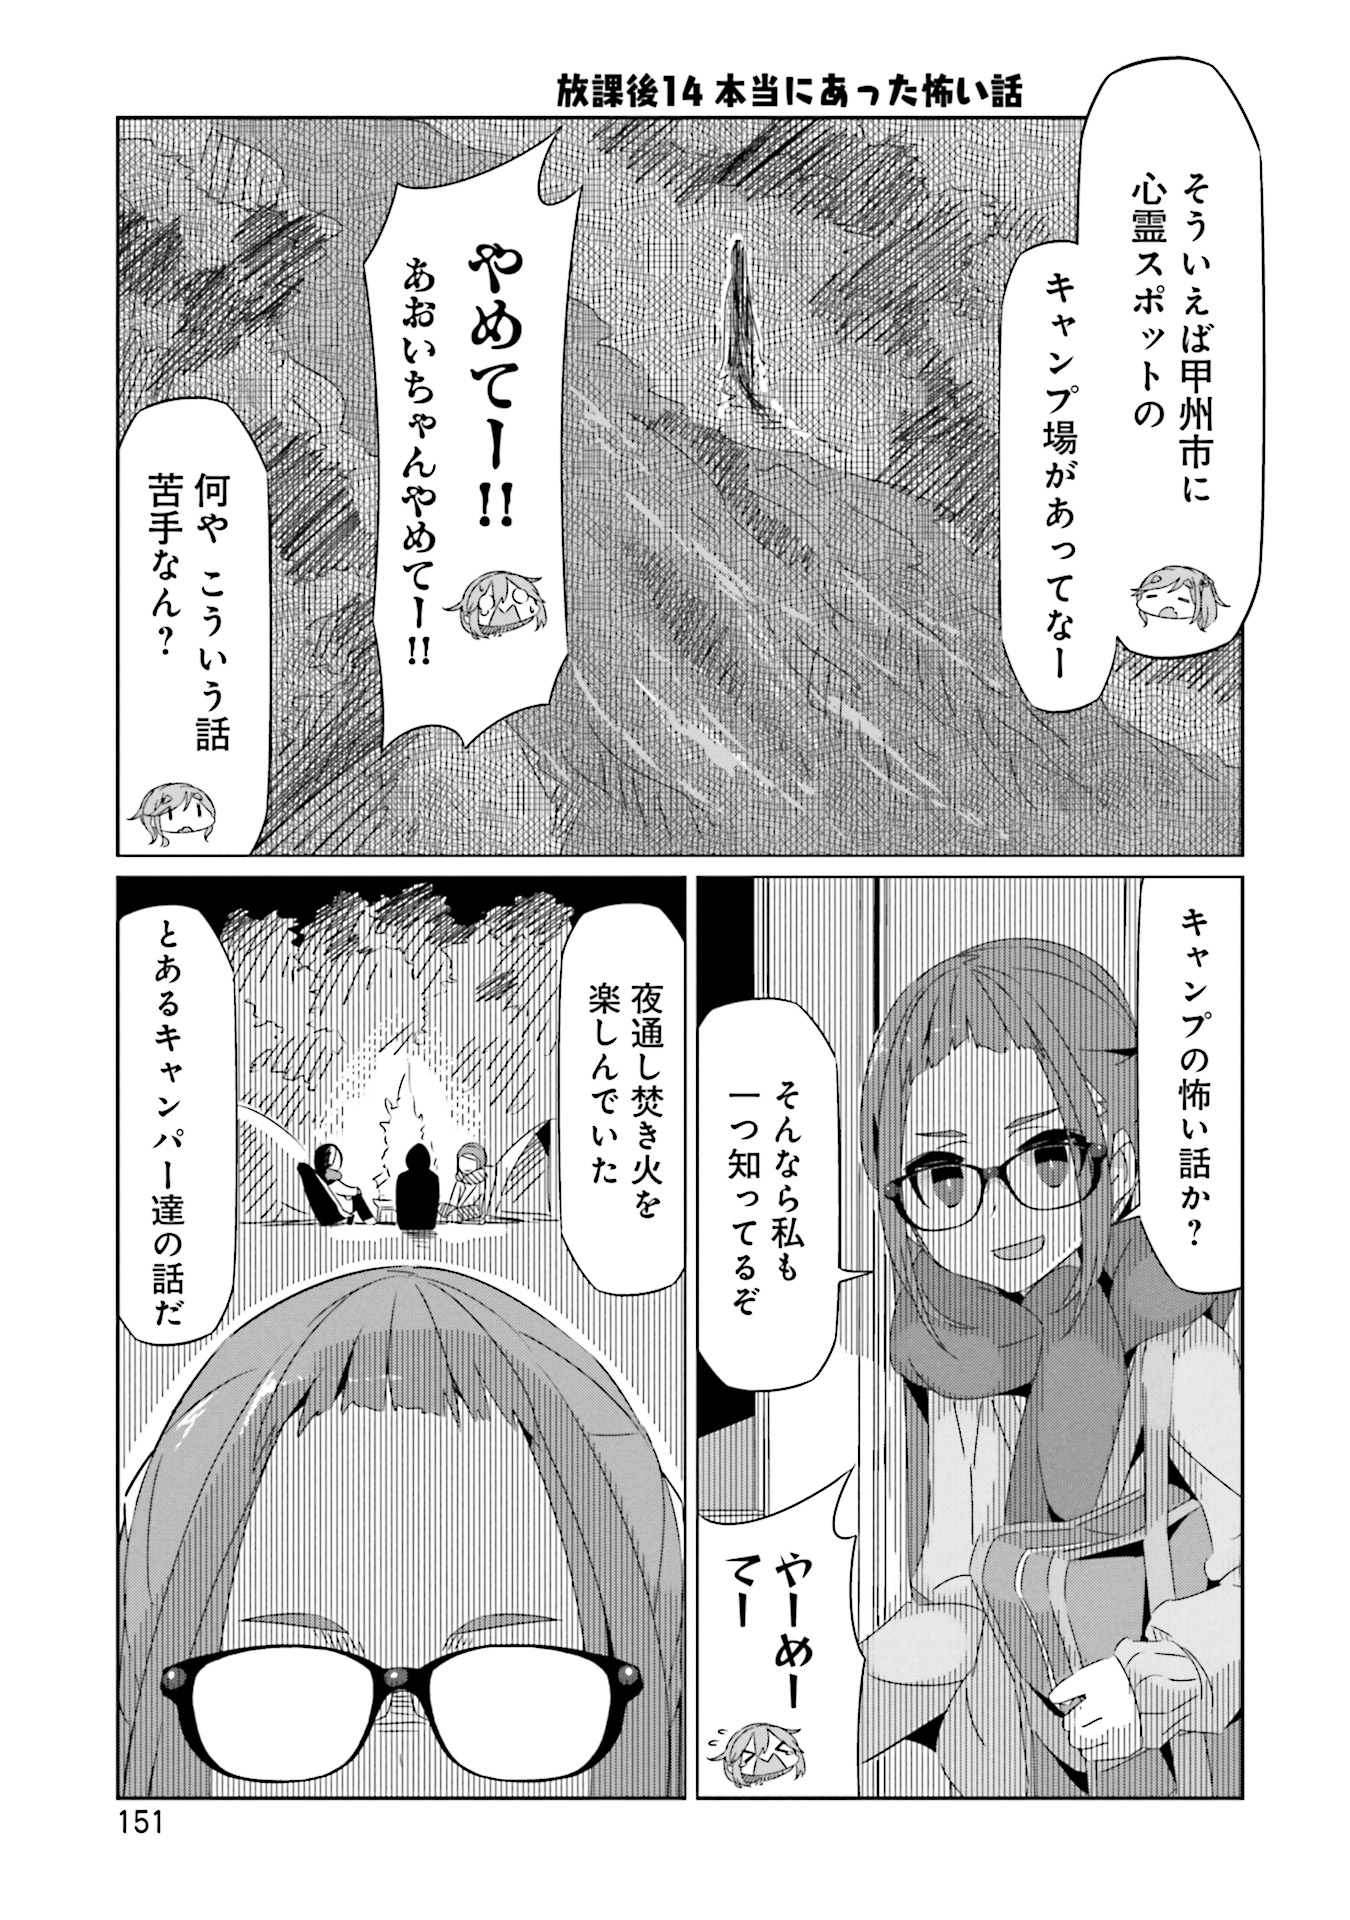 Yuru Camp - Chapter 23.5 - Page 3